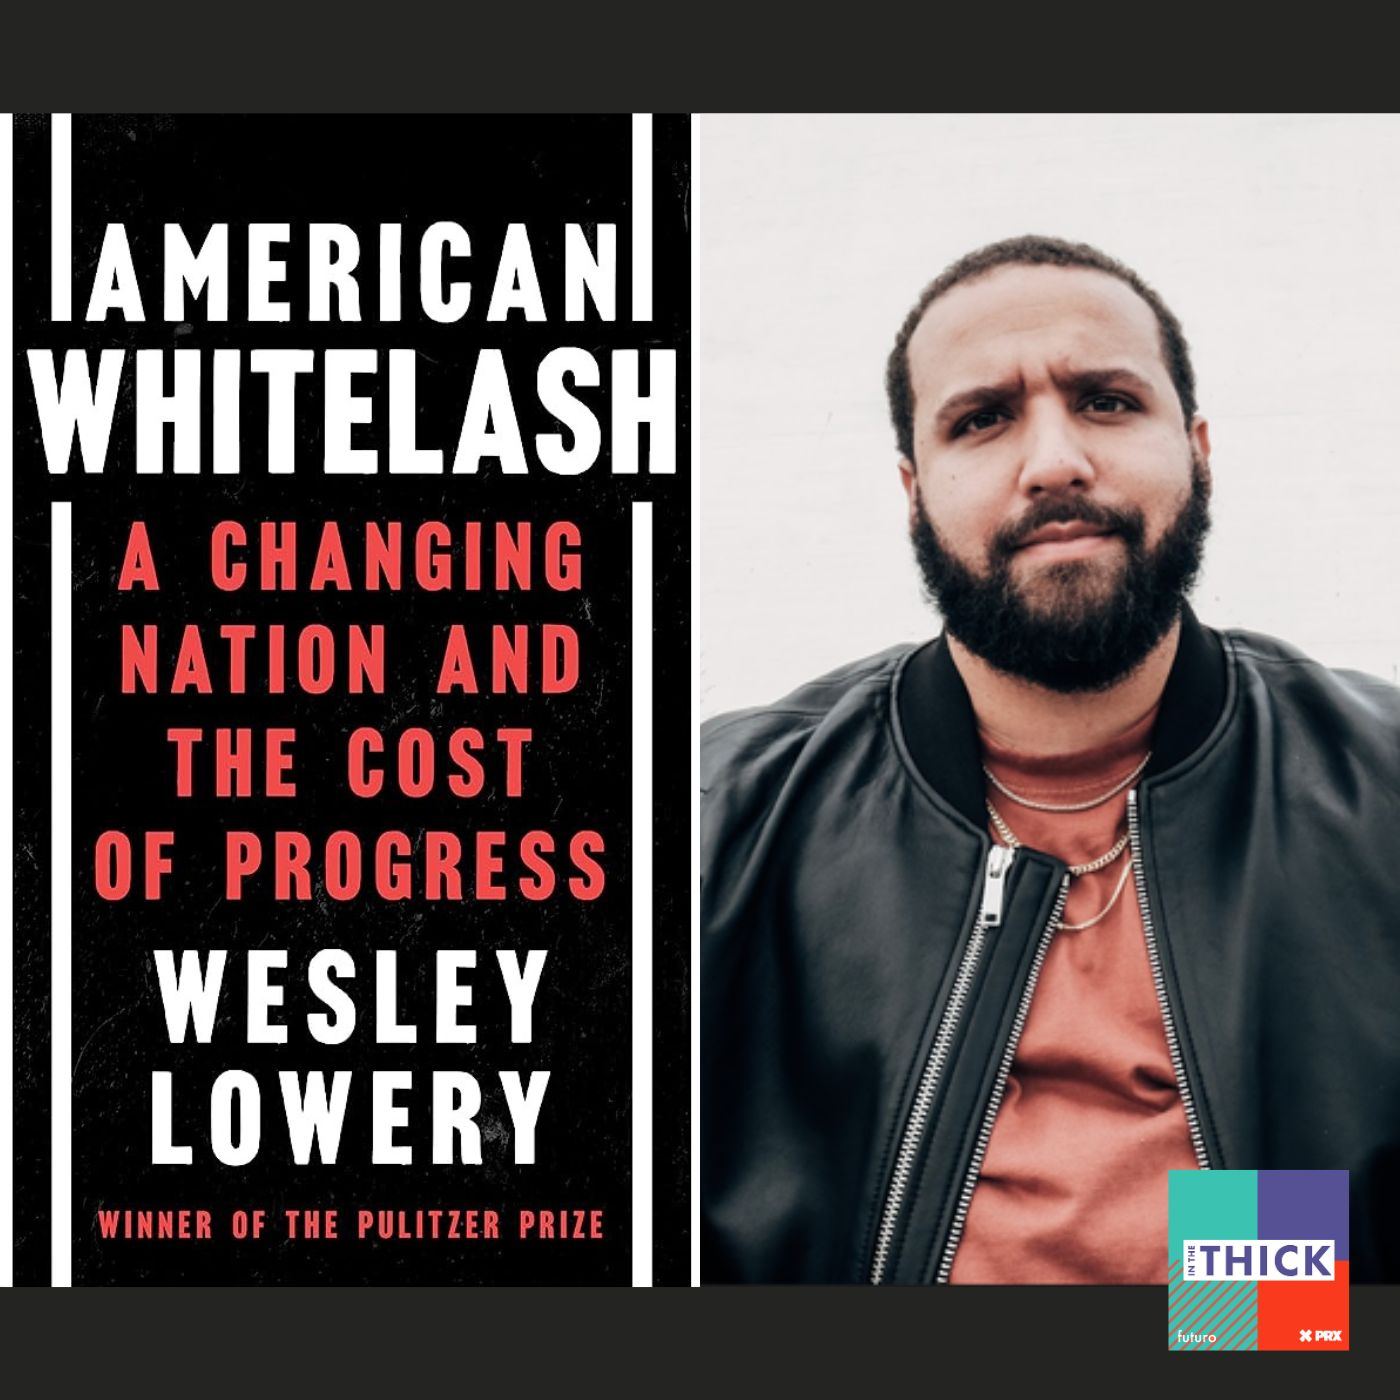 American Whitelash